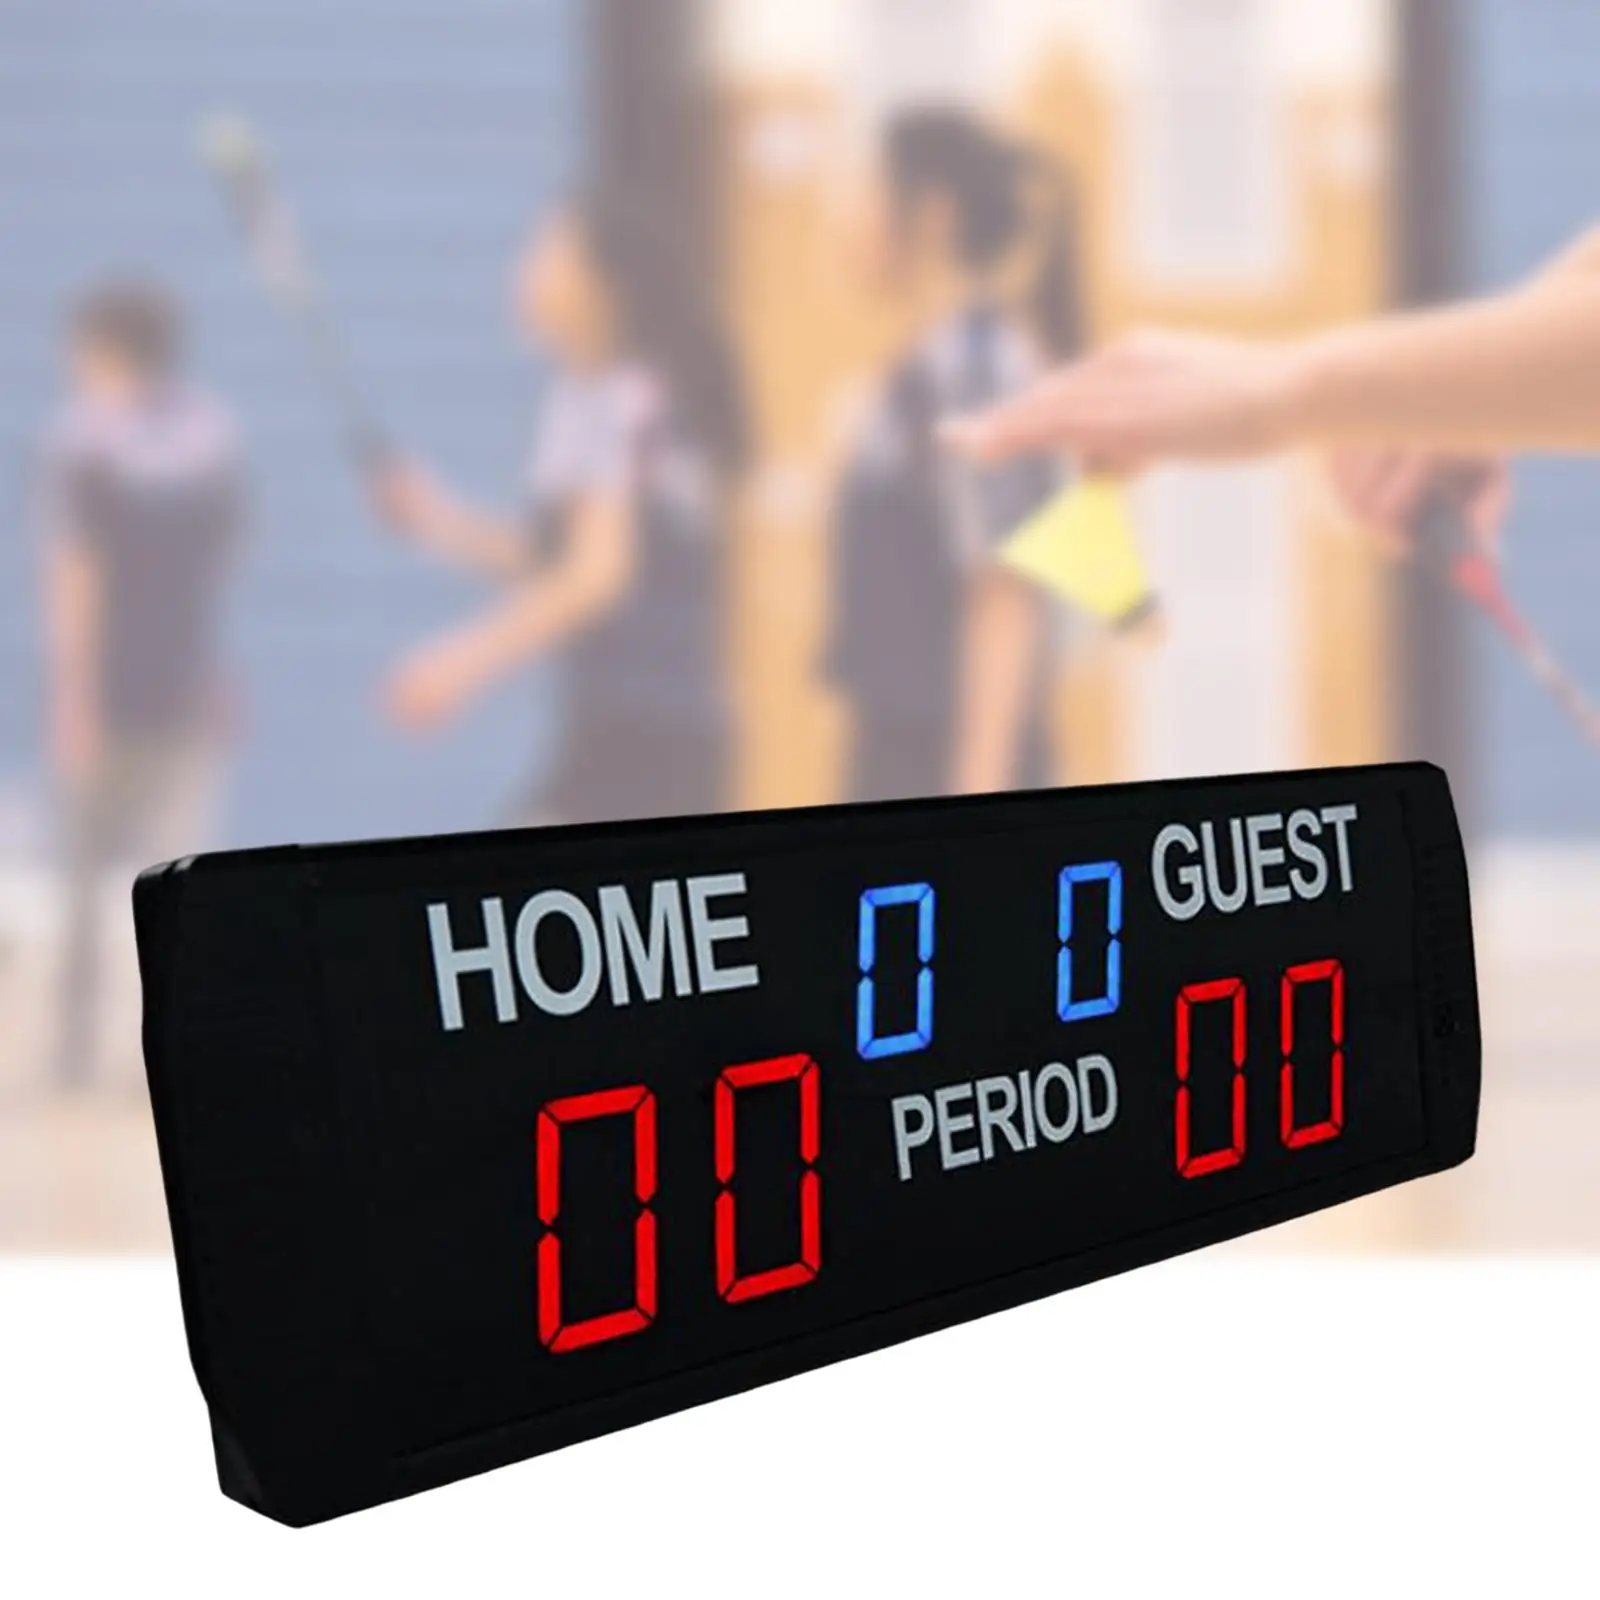 Portable Scoreboard Digital Electronic Wall Mount LED Score Board for Gymnasium Basketball Scores Score Keeper Pingpong Pong